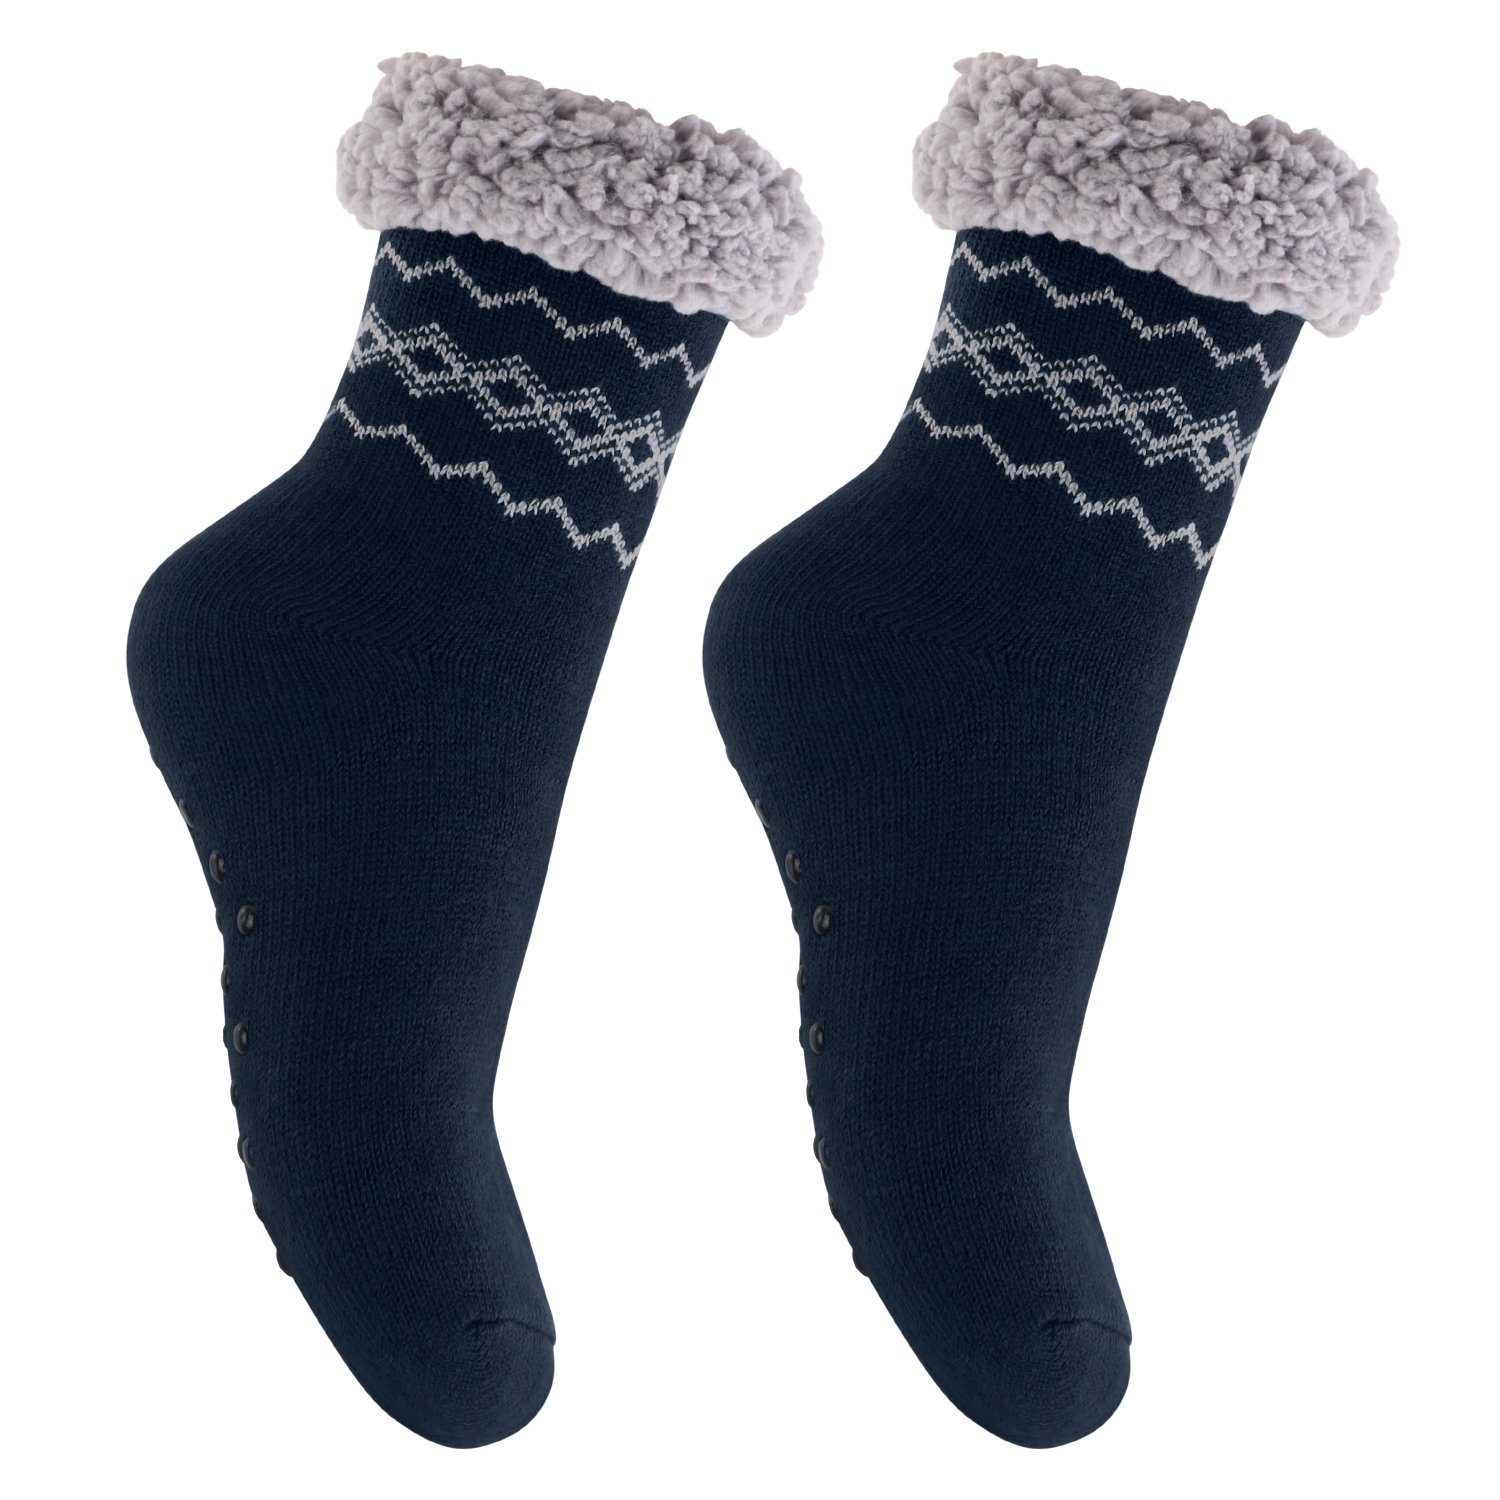 Footstar ABS-Socken Winter Haussocken für Damen & Herren (1/2 Paar) Kuschelsocken 2 x Navy